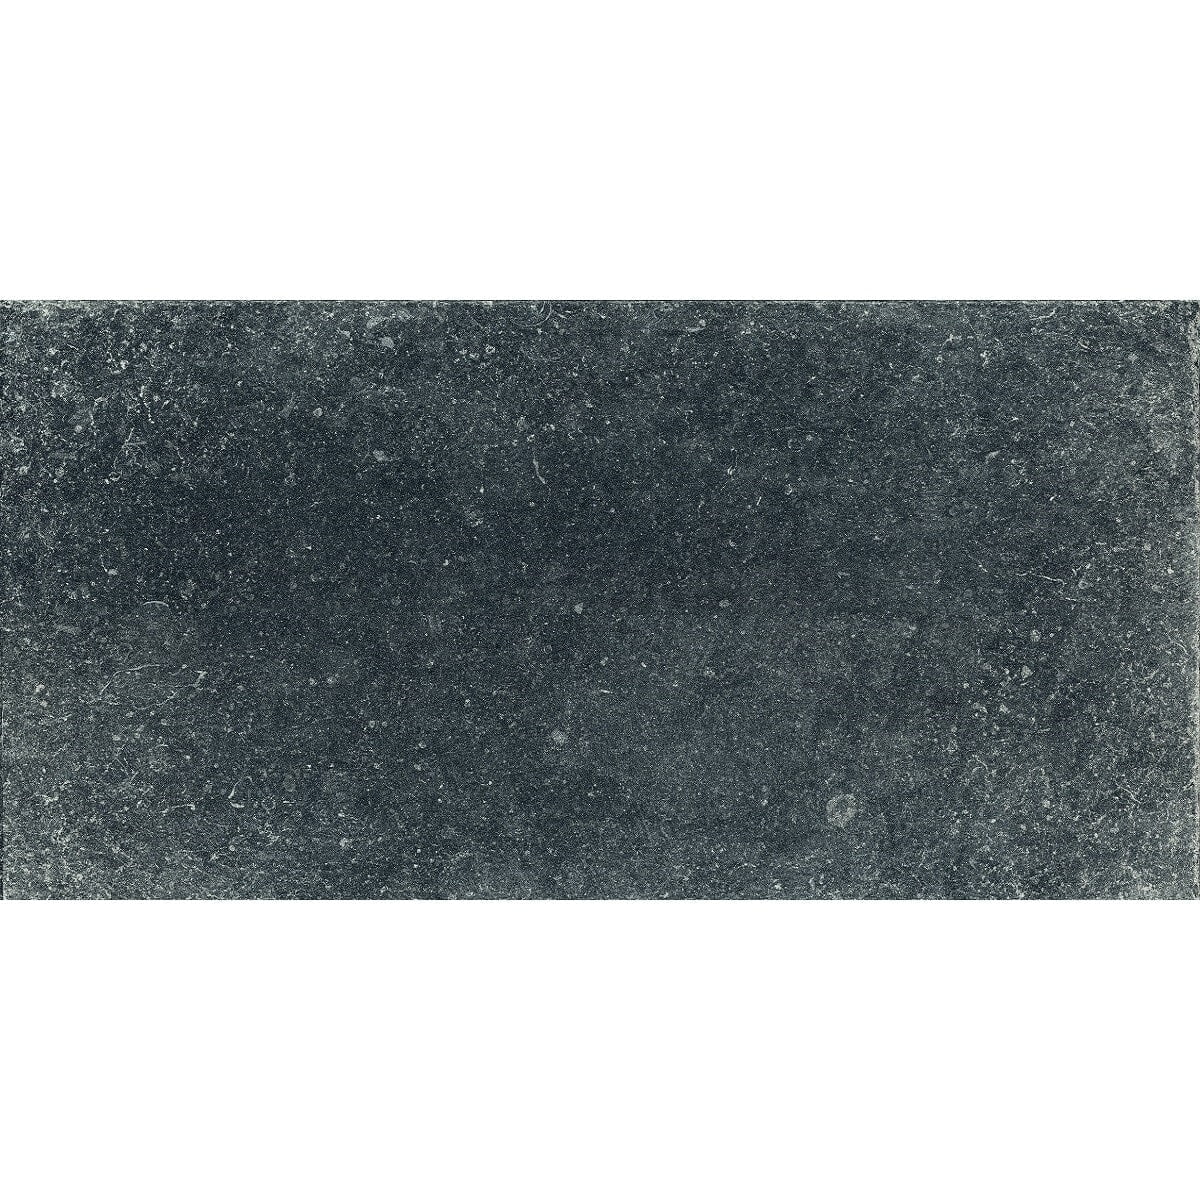 Плитка терасна Aquaviva Granito Black, 448x898x20 мм